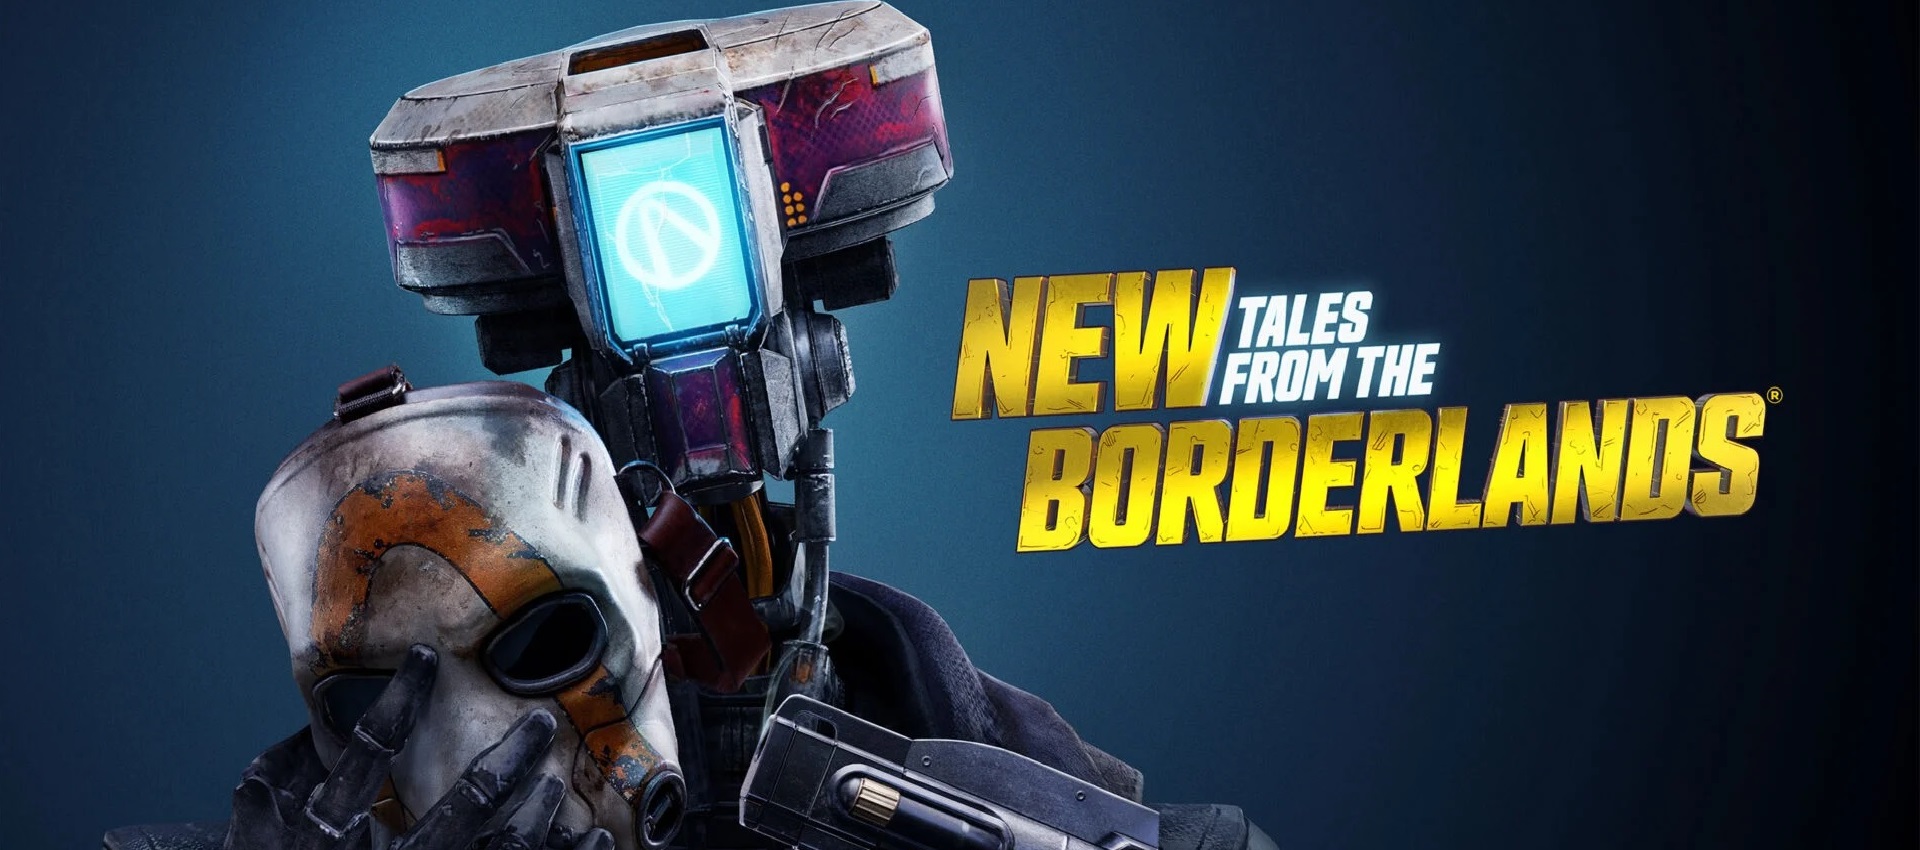 بررسی بازی New Tales from the Borderlands